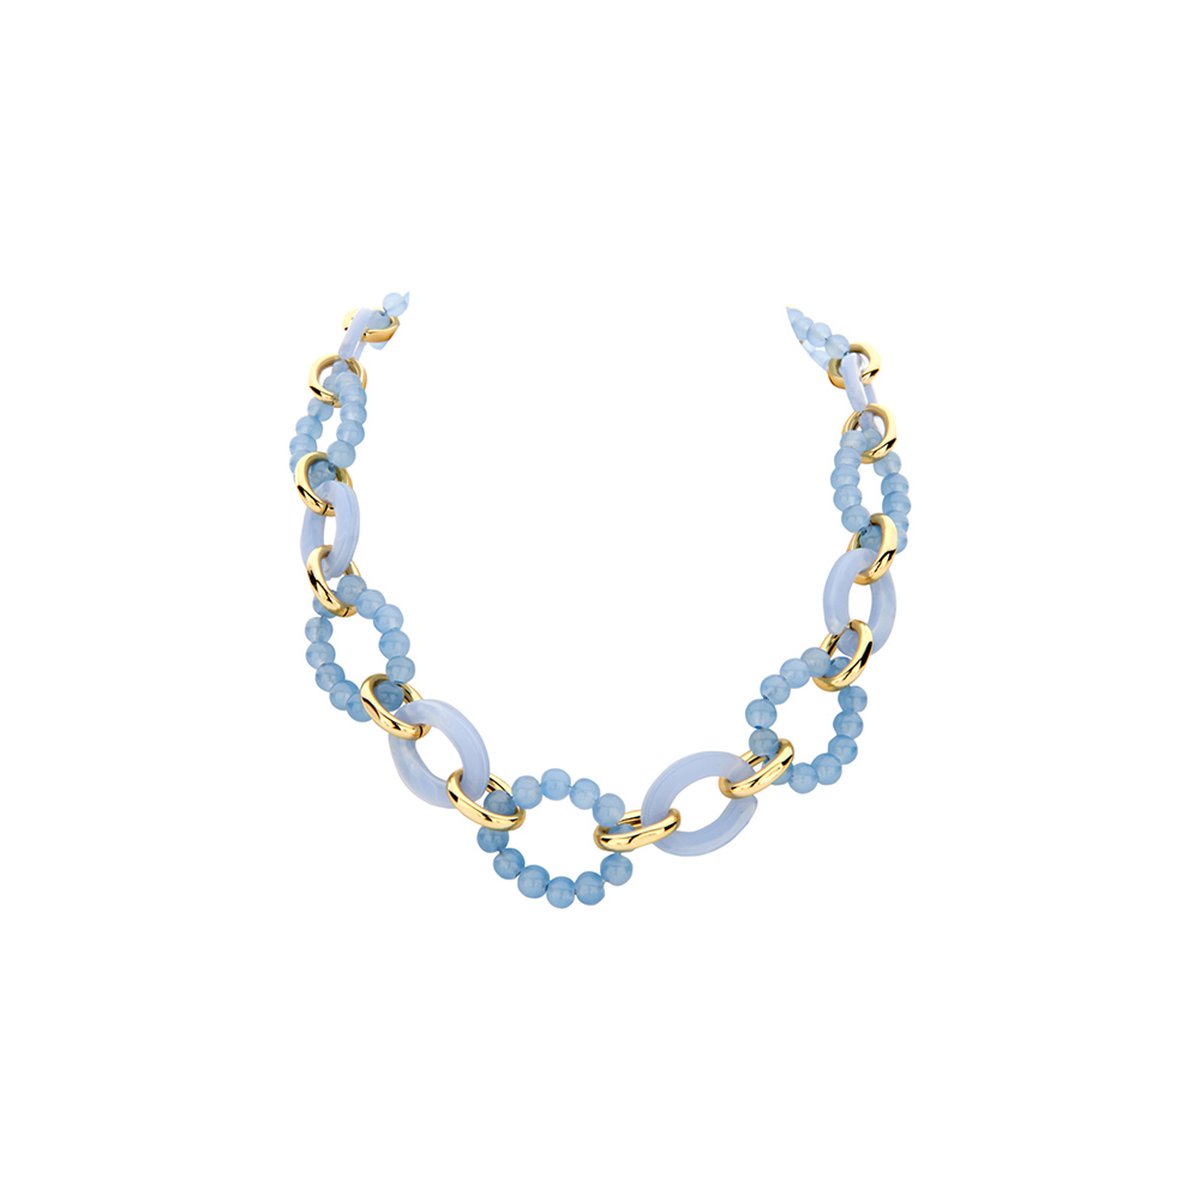 Les Cordes - Halsketting - Collier - DALICIA - Kleur Blauw - Metaal - Sieraad Dames - Juwelen - Statement ketting